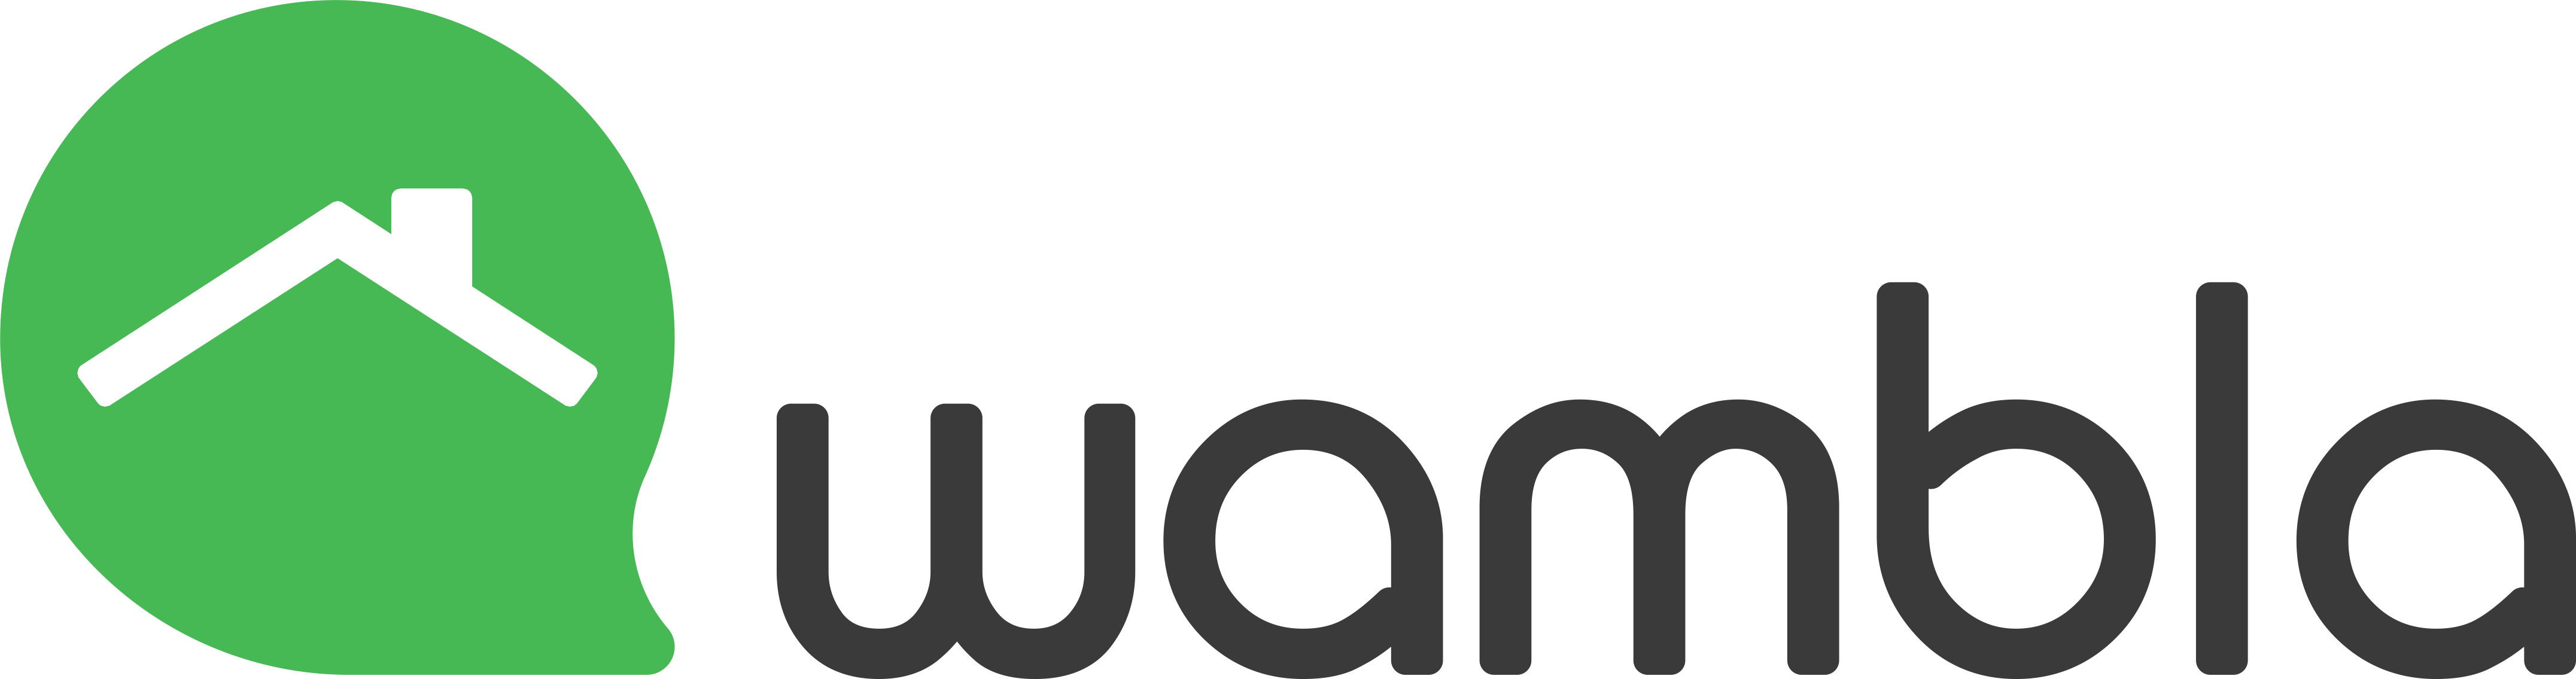 Wambla logo